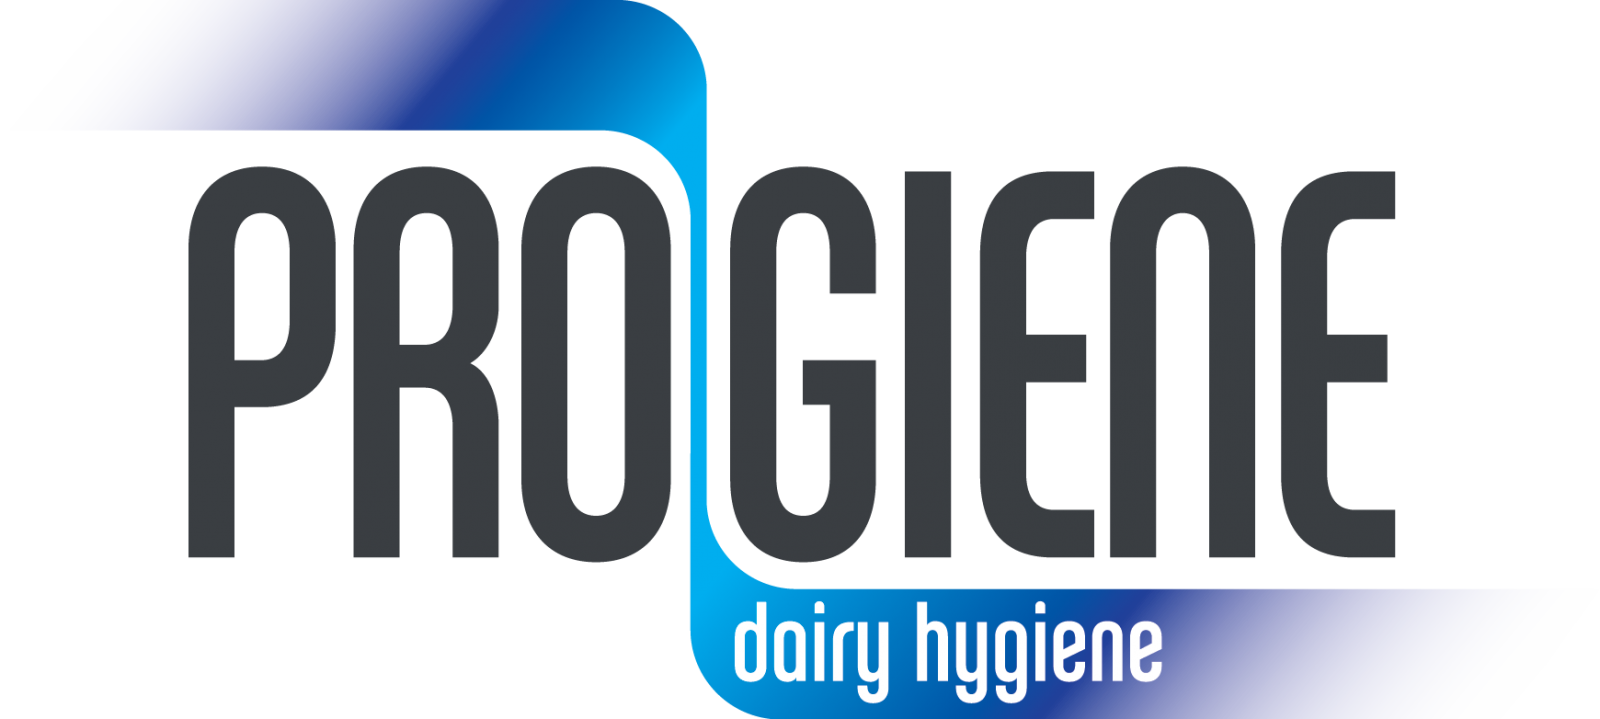 Progiene logo